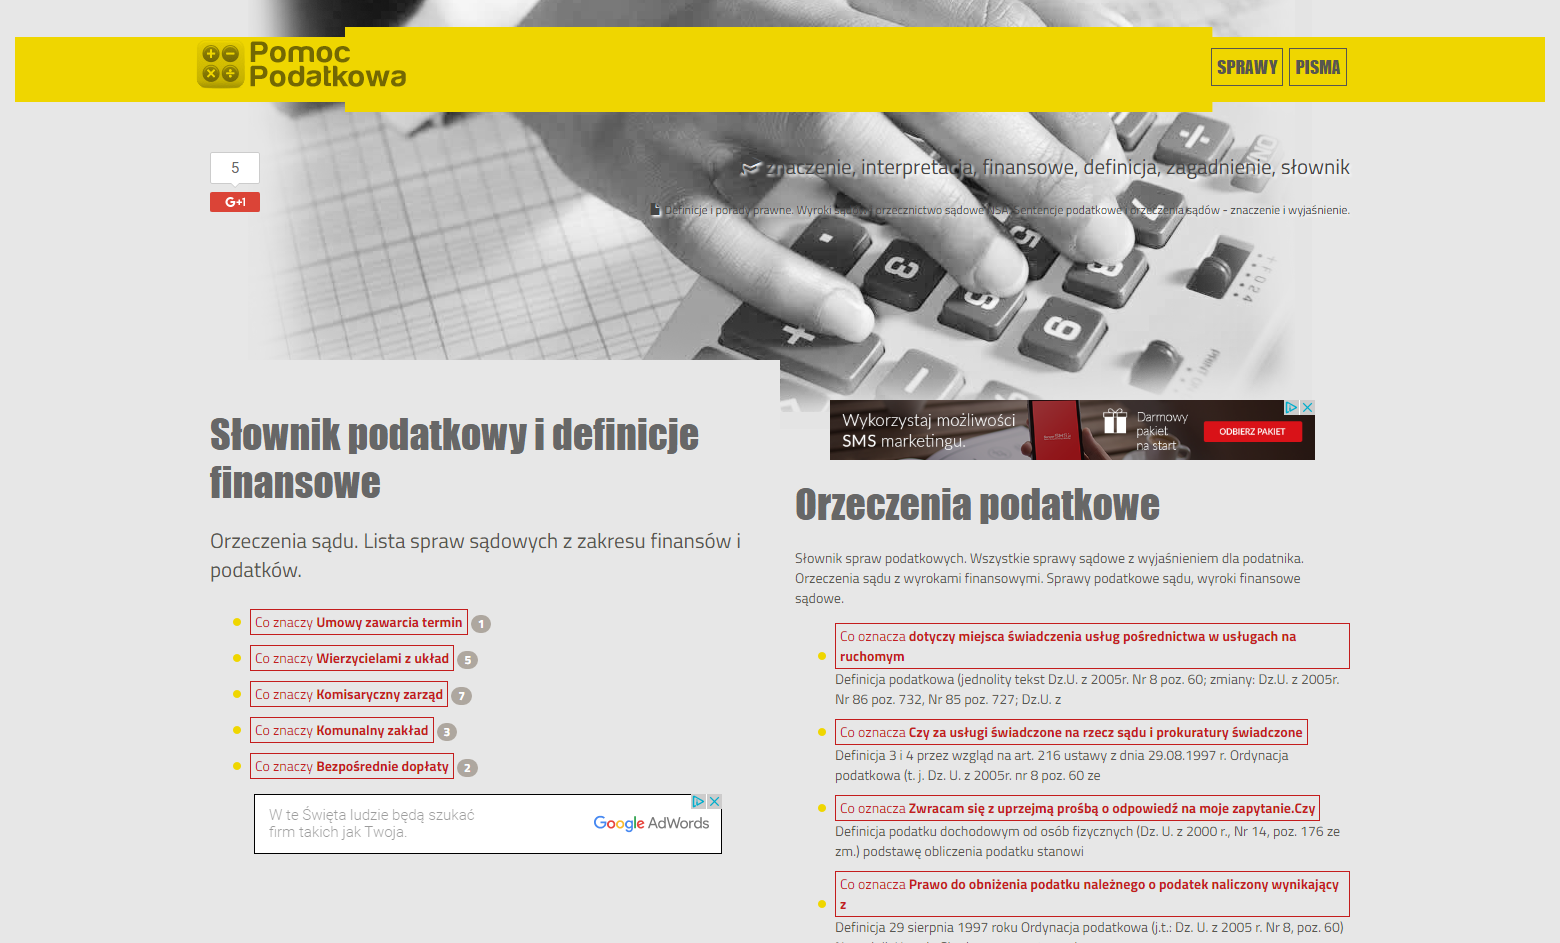 Project Pomoc-Podatkowa.pl